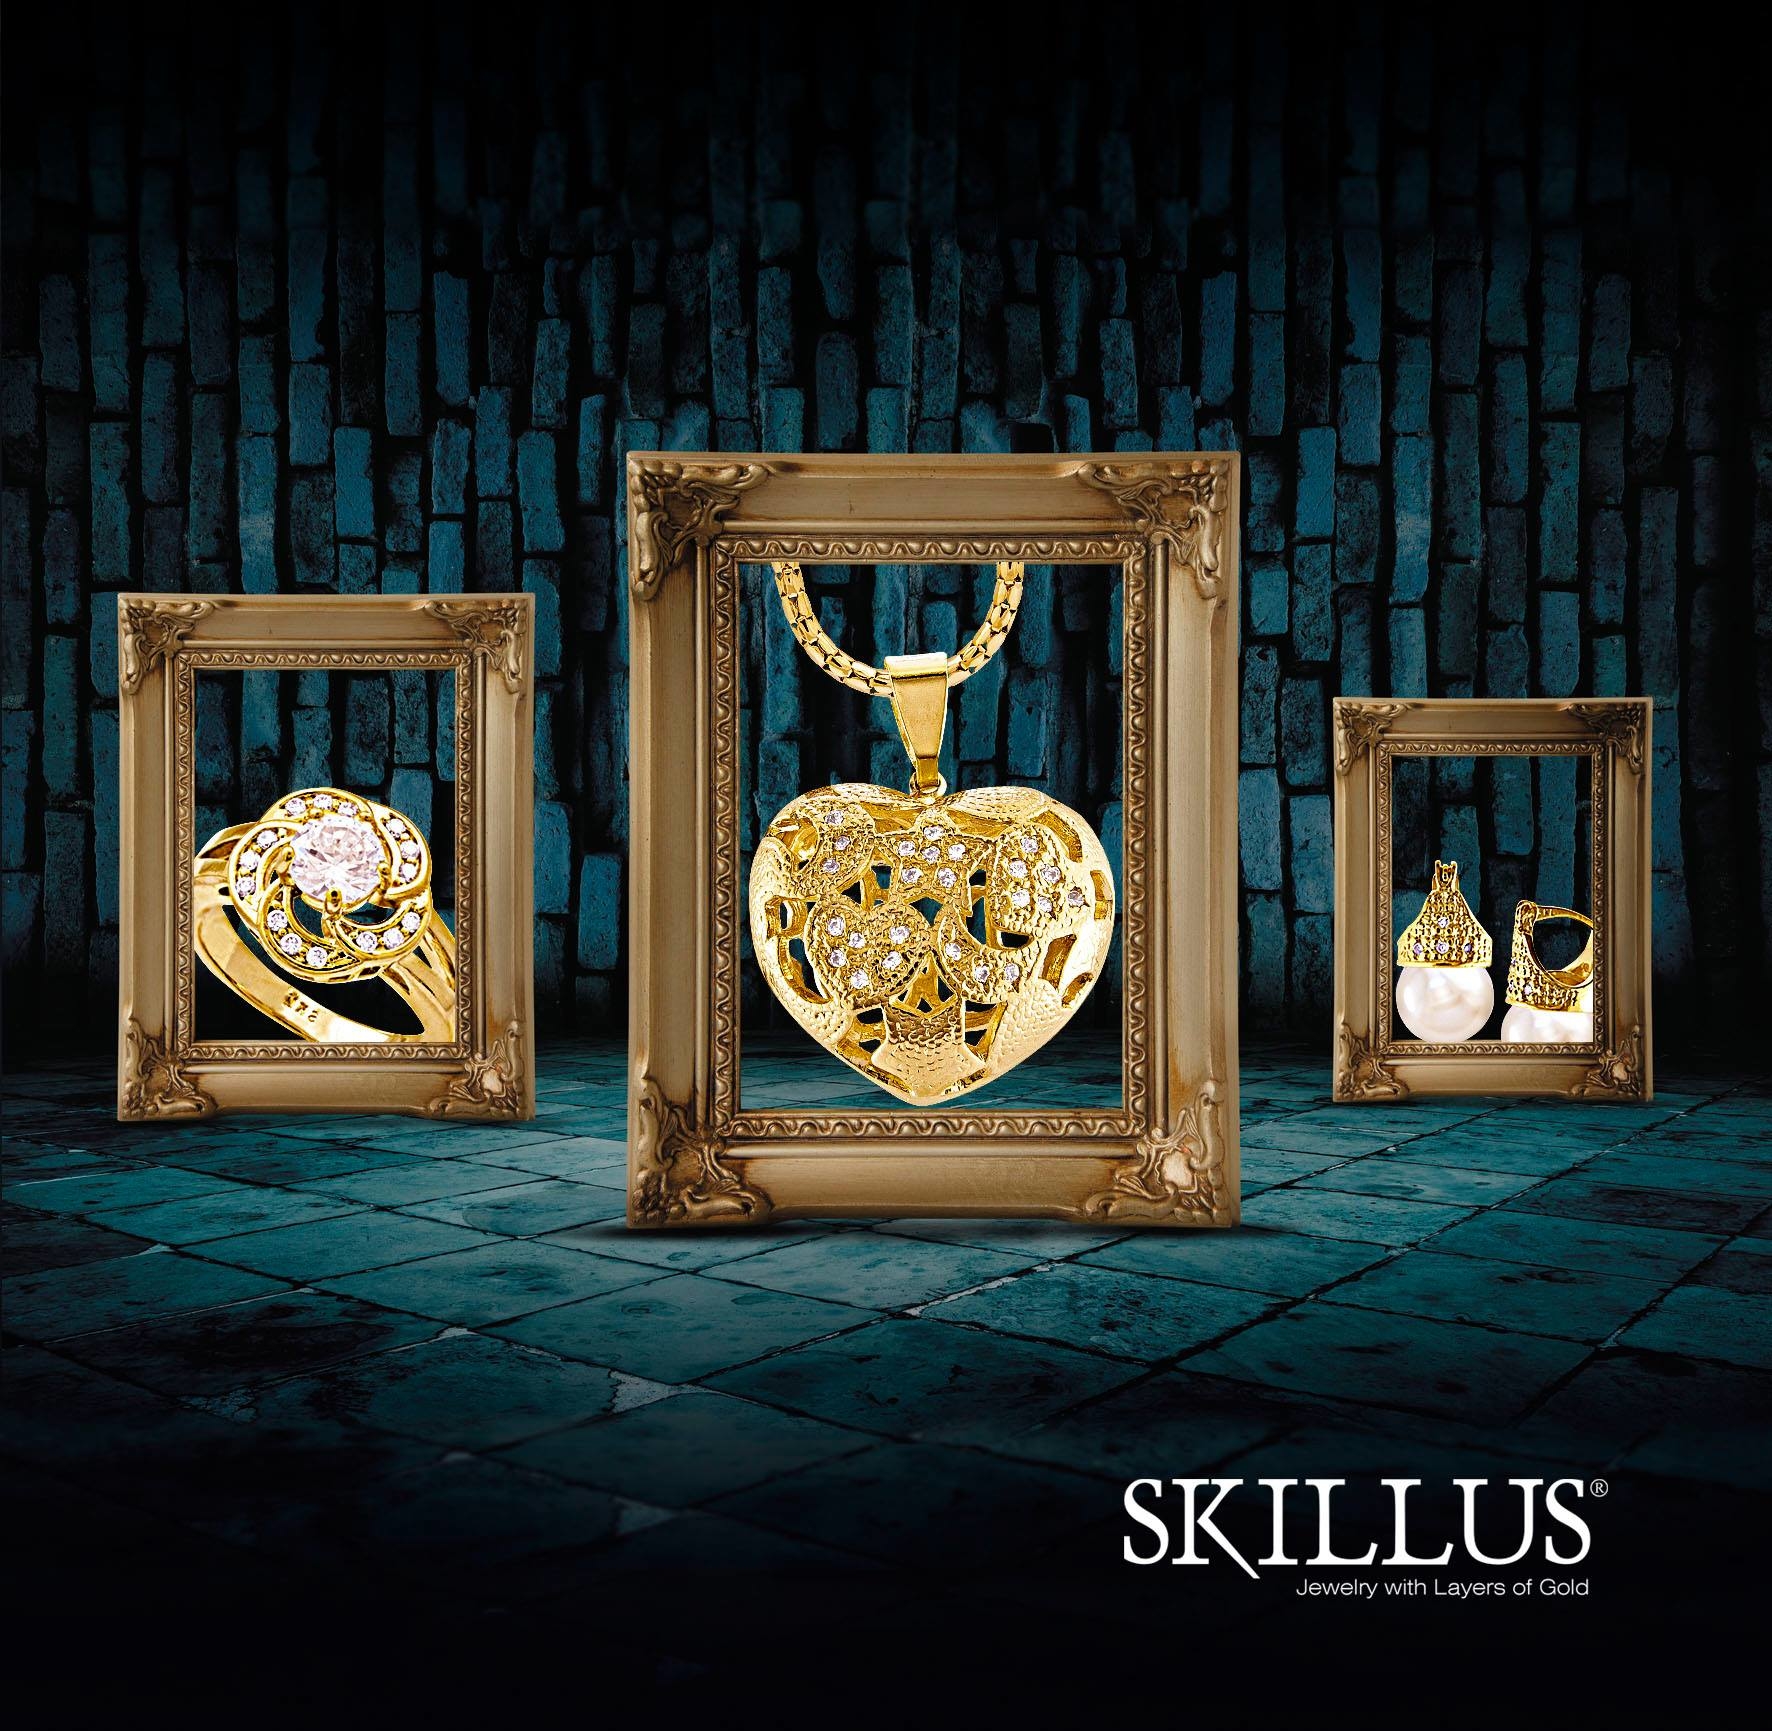 SKILLUS - Real Gold Layered Jewelry - Oro Laminado 18kt Photo